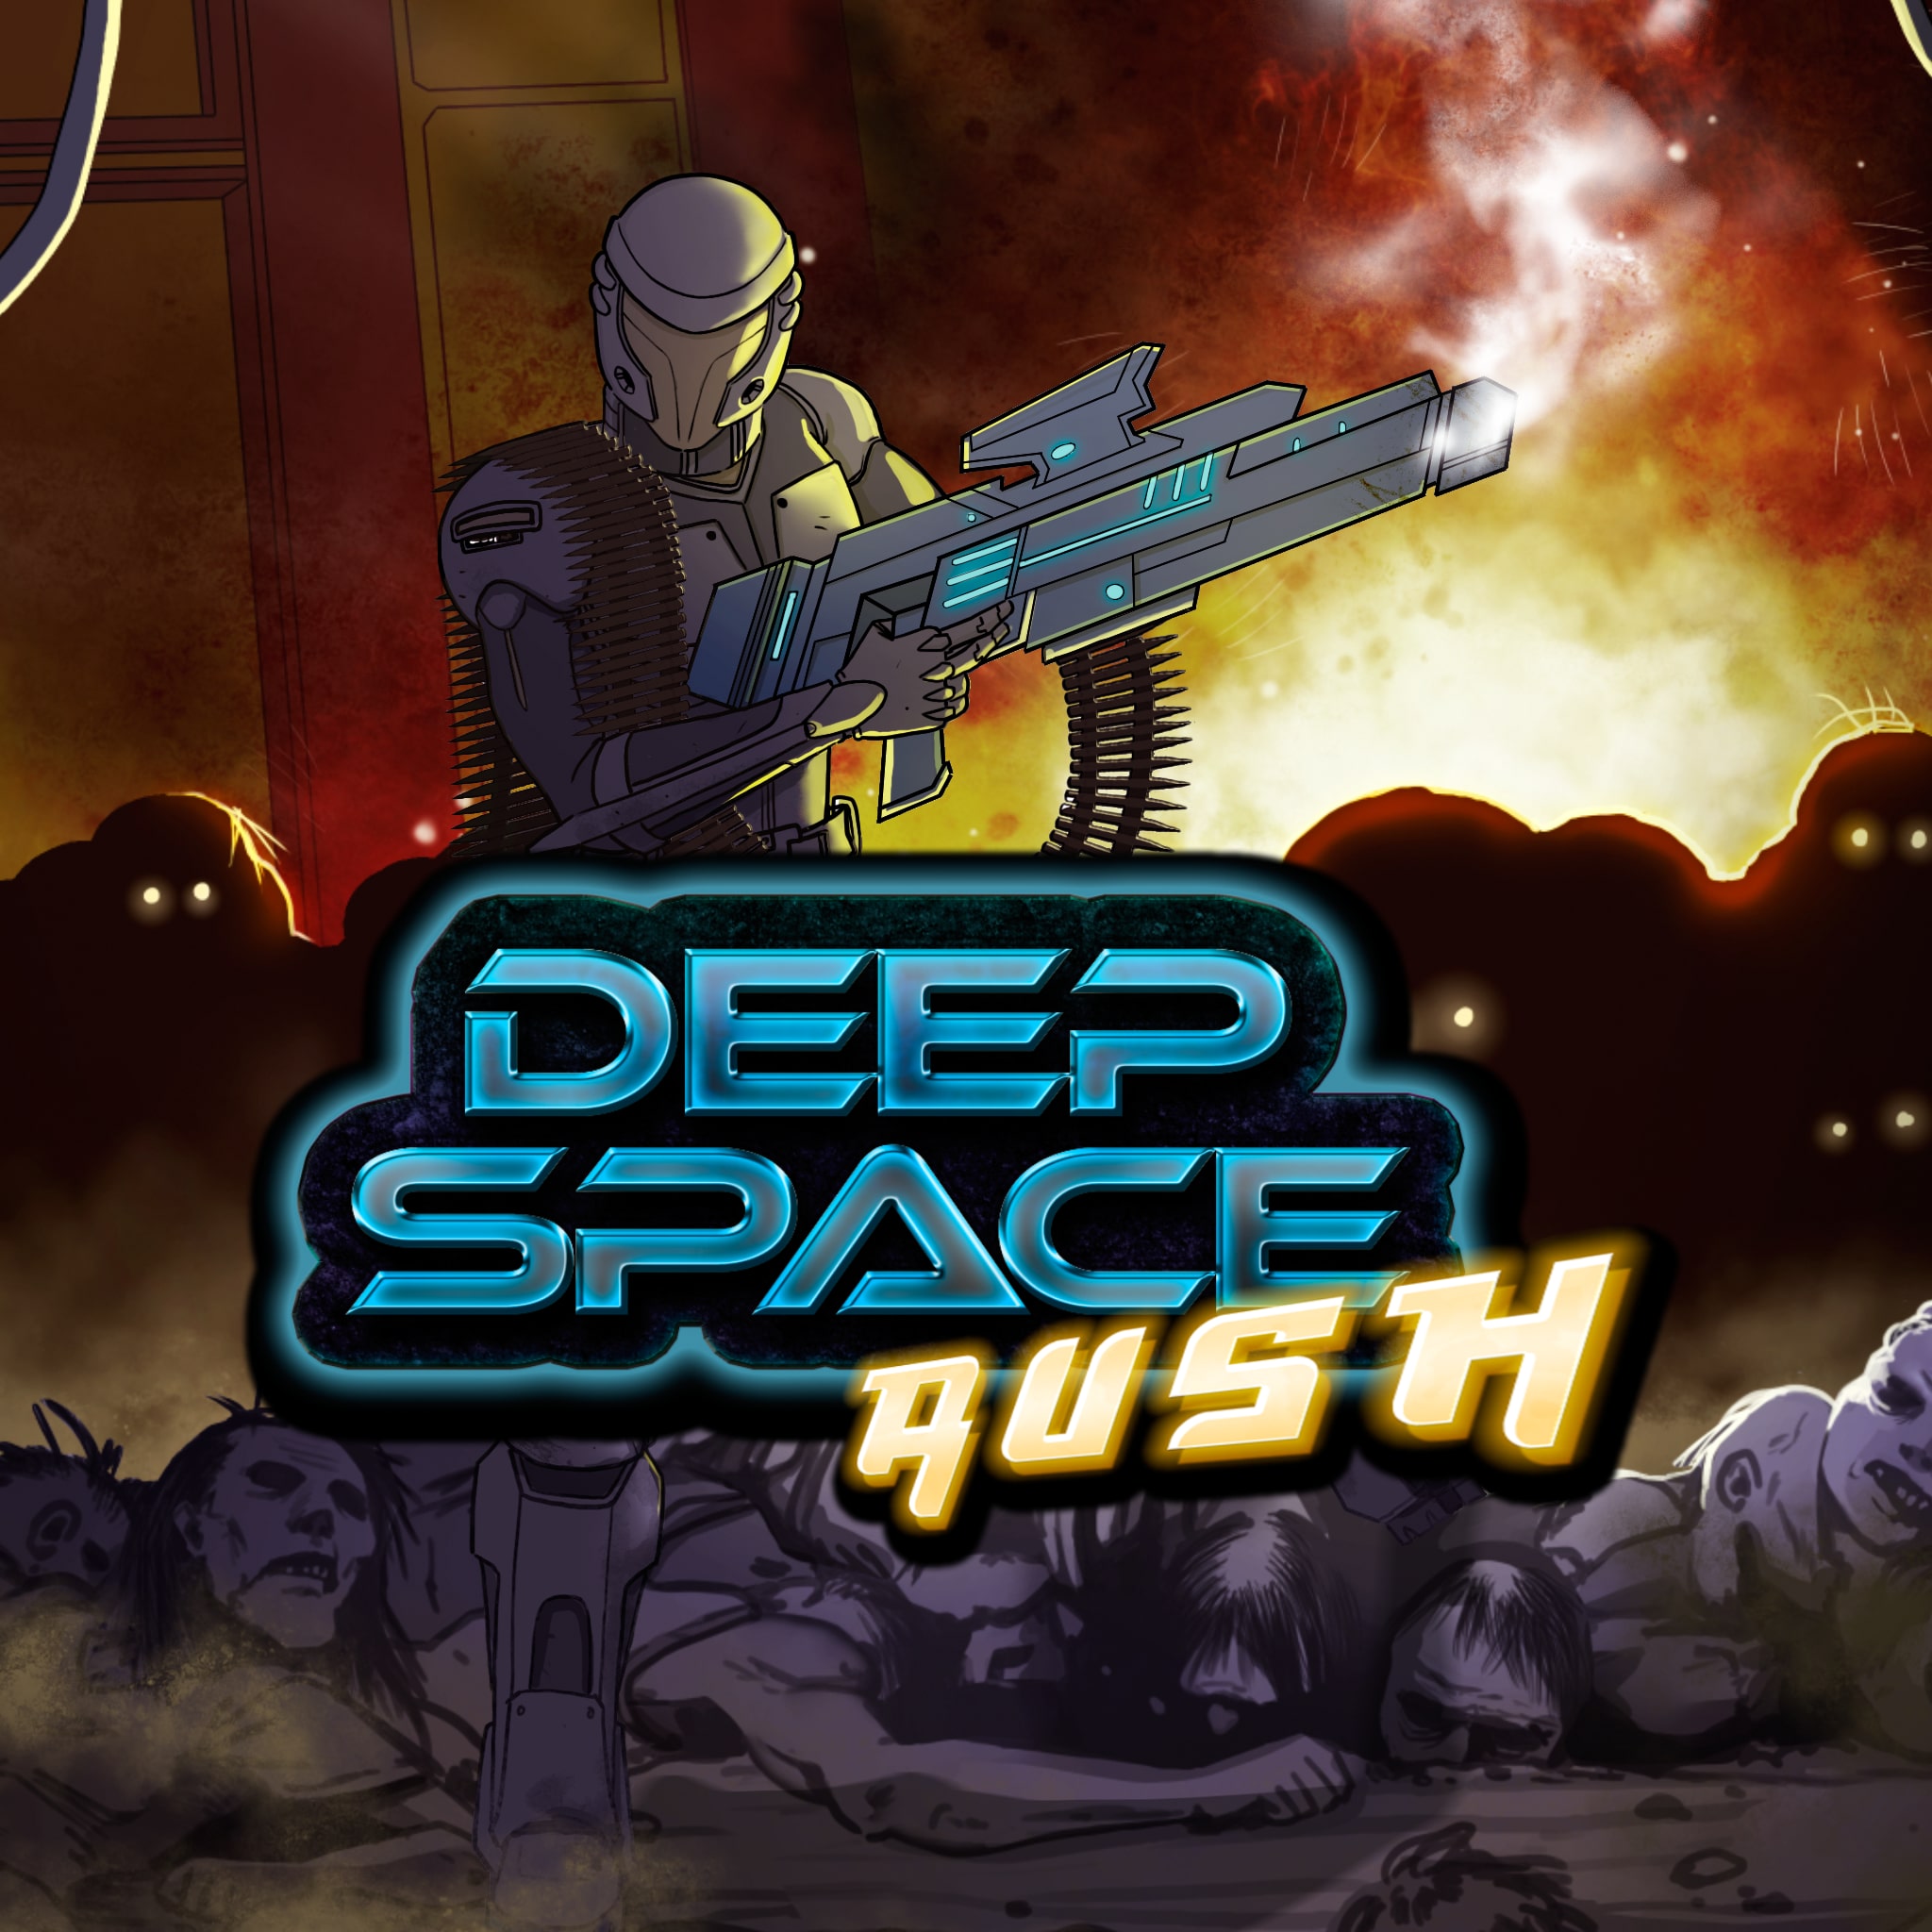 Deep Space Rush